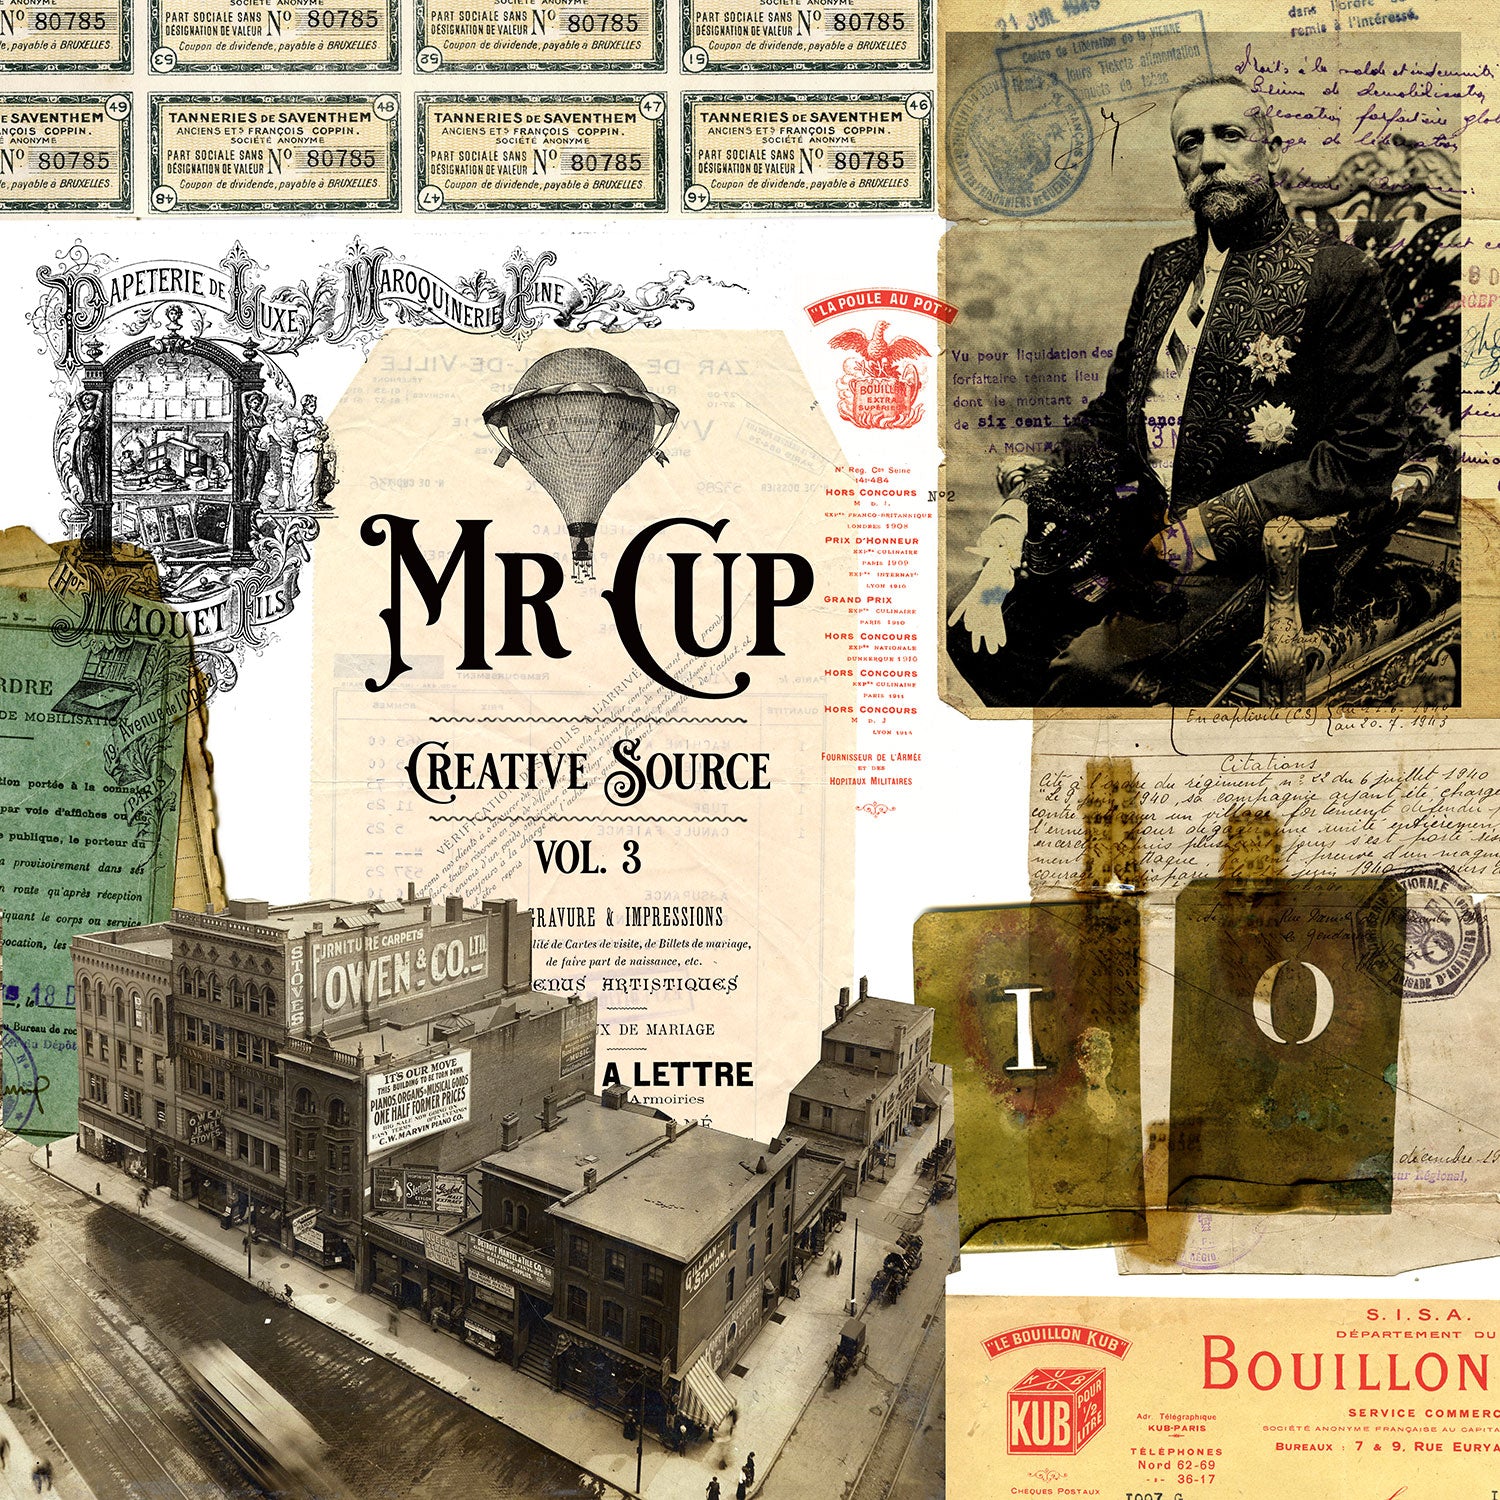 Mr Cup Creative Source . Vol 3 - MR CUP